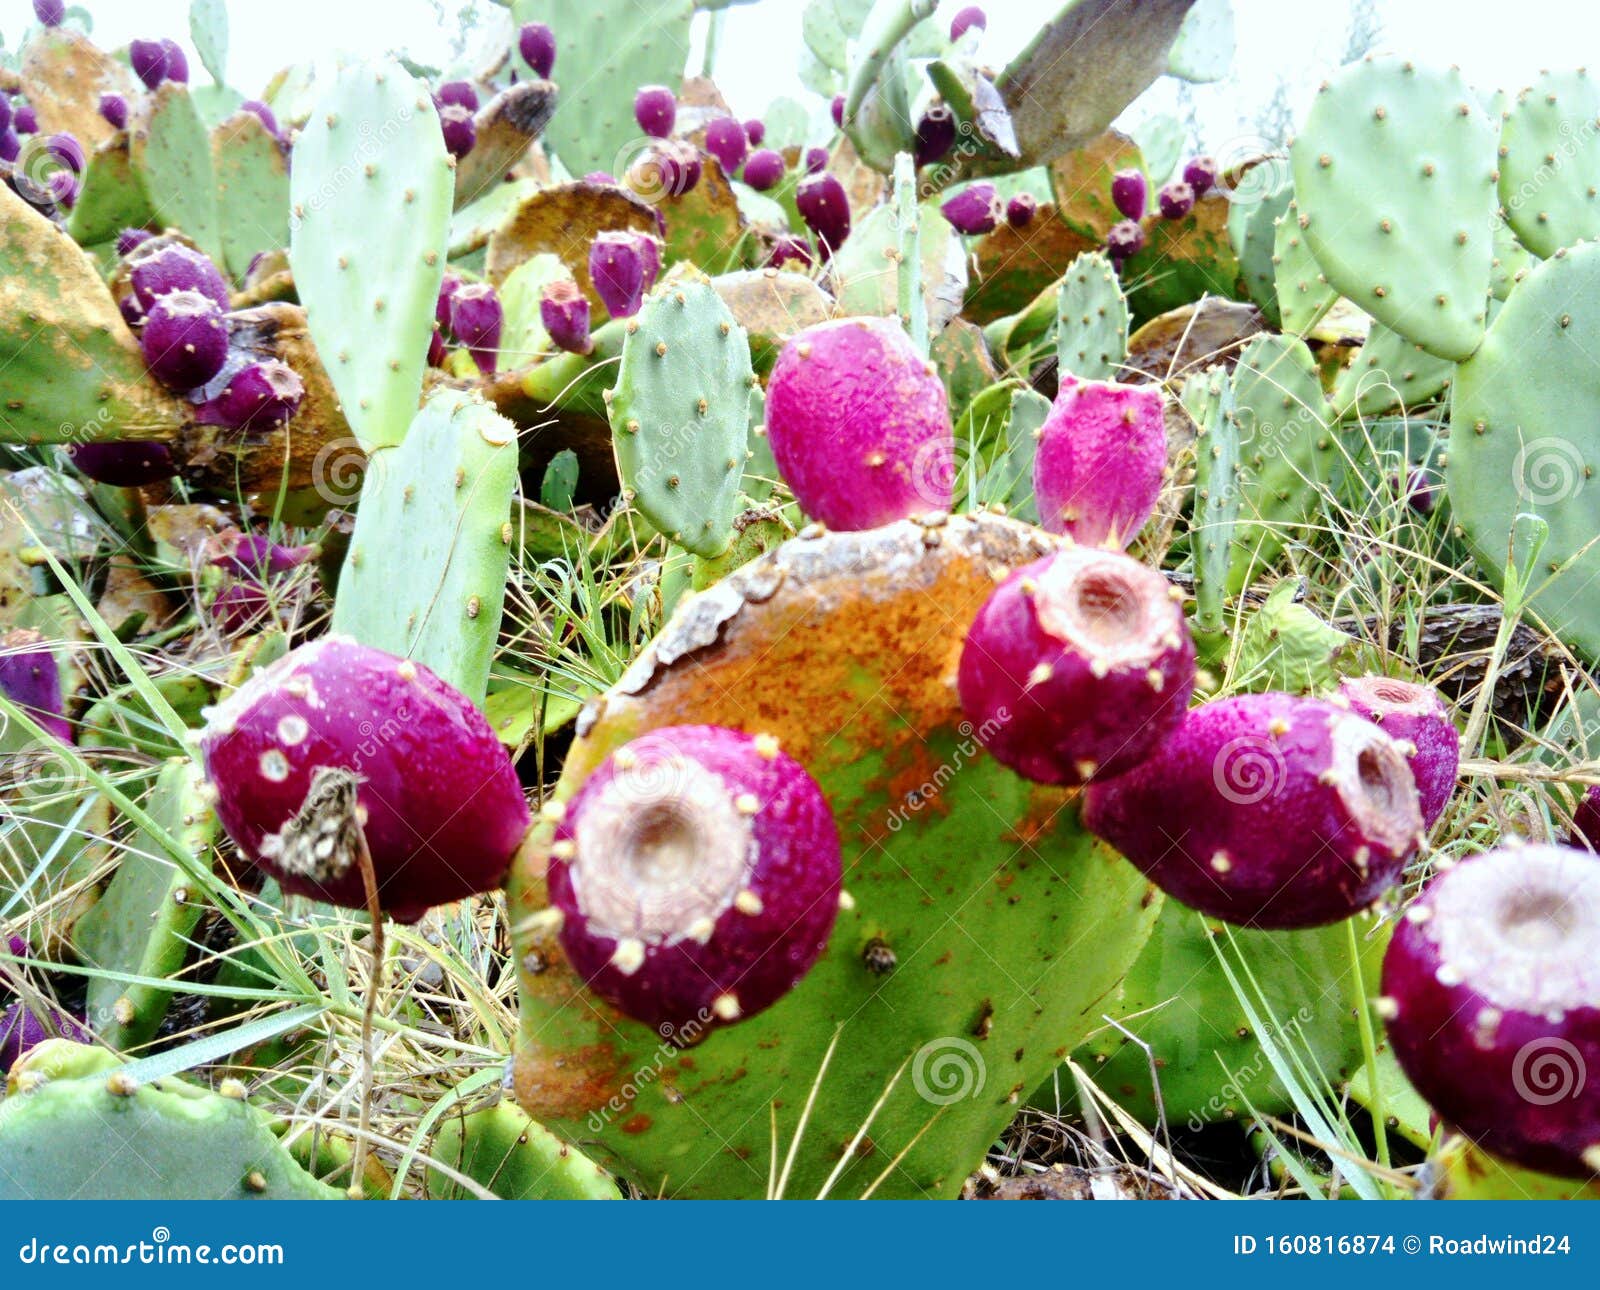 Prickly Pear Purple Fruits Stock Photo Image Of Macedonia 160816874